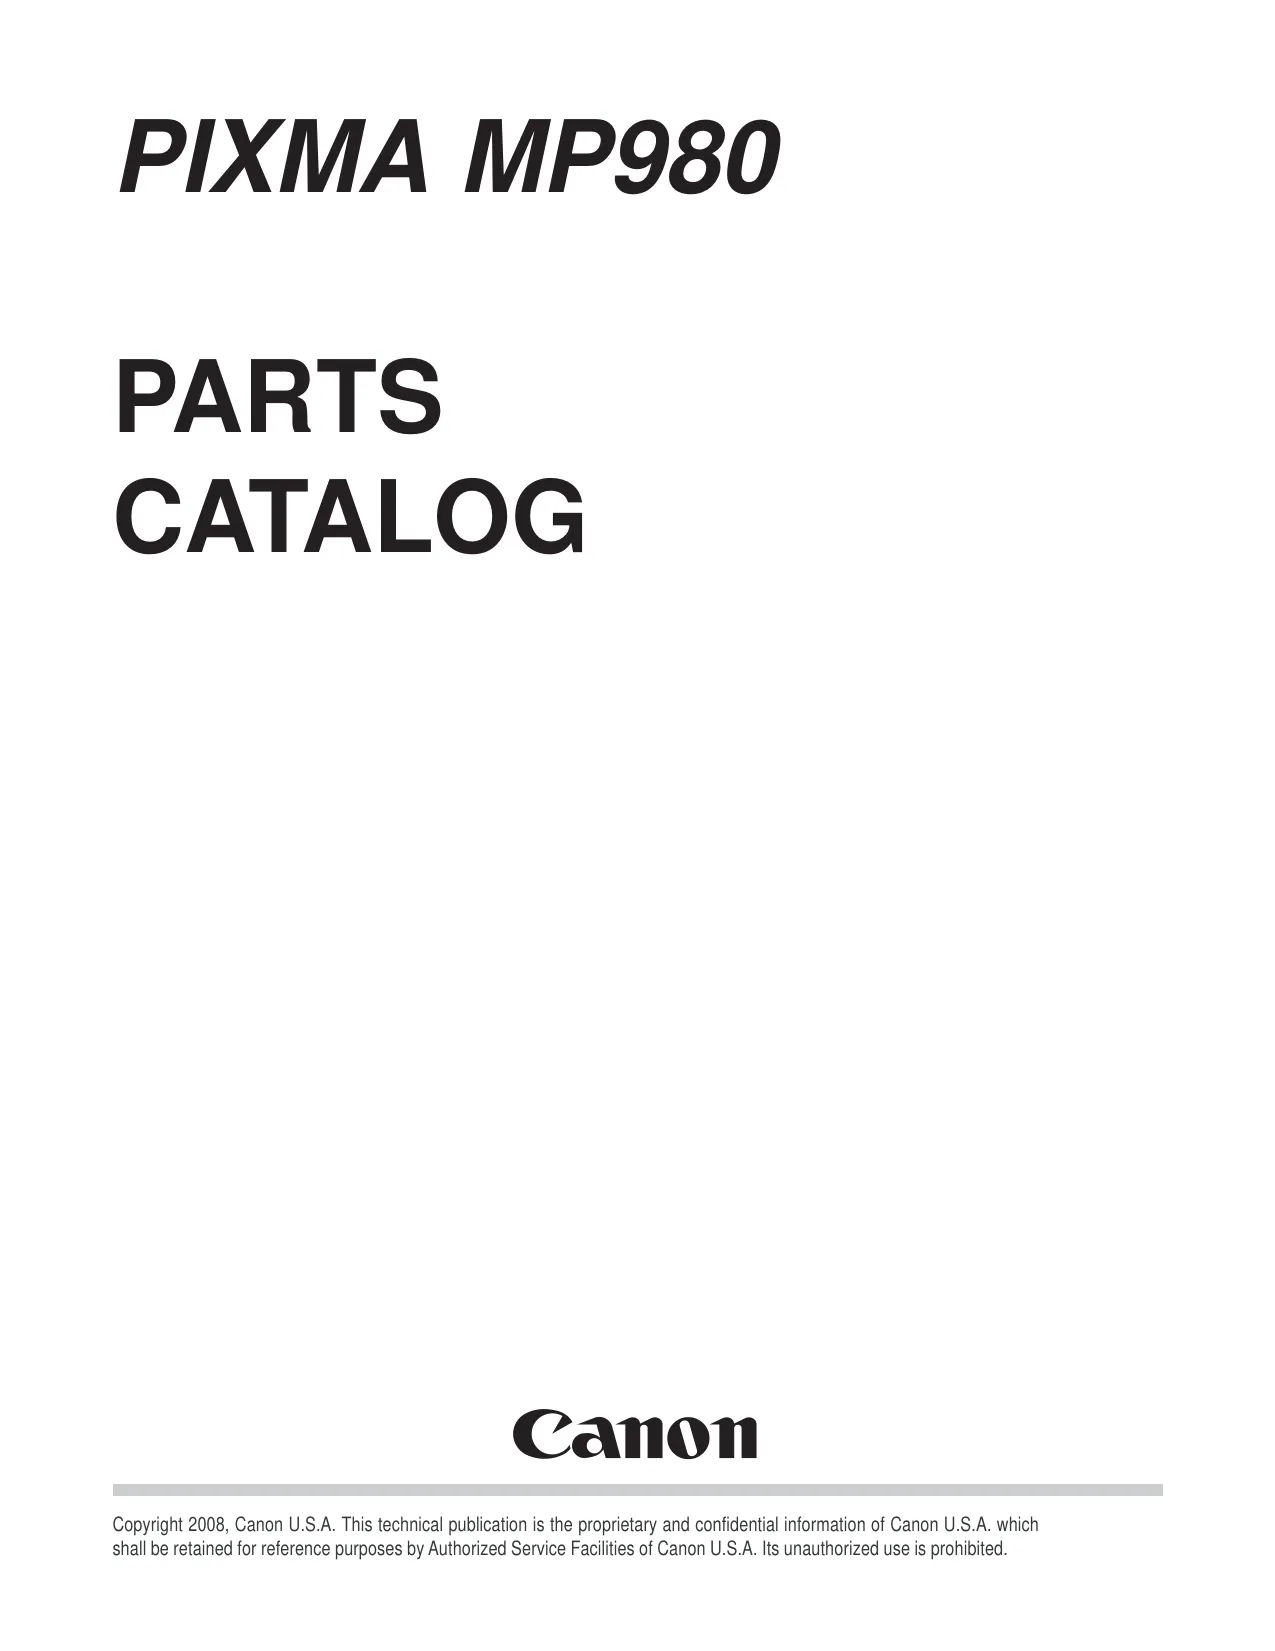 Canon Pixma MP980 multifunction inkjet printer service guide + parts catalog